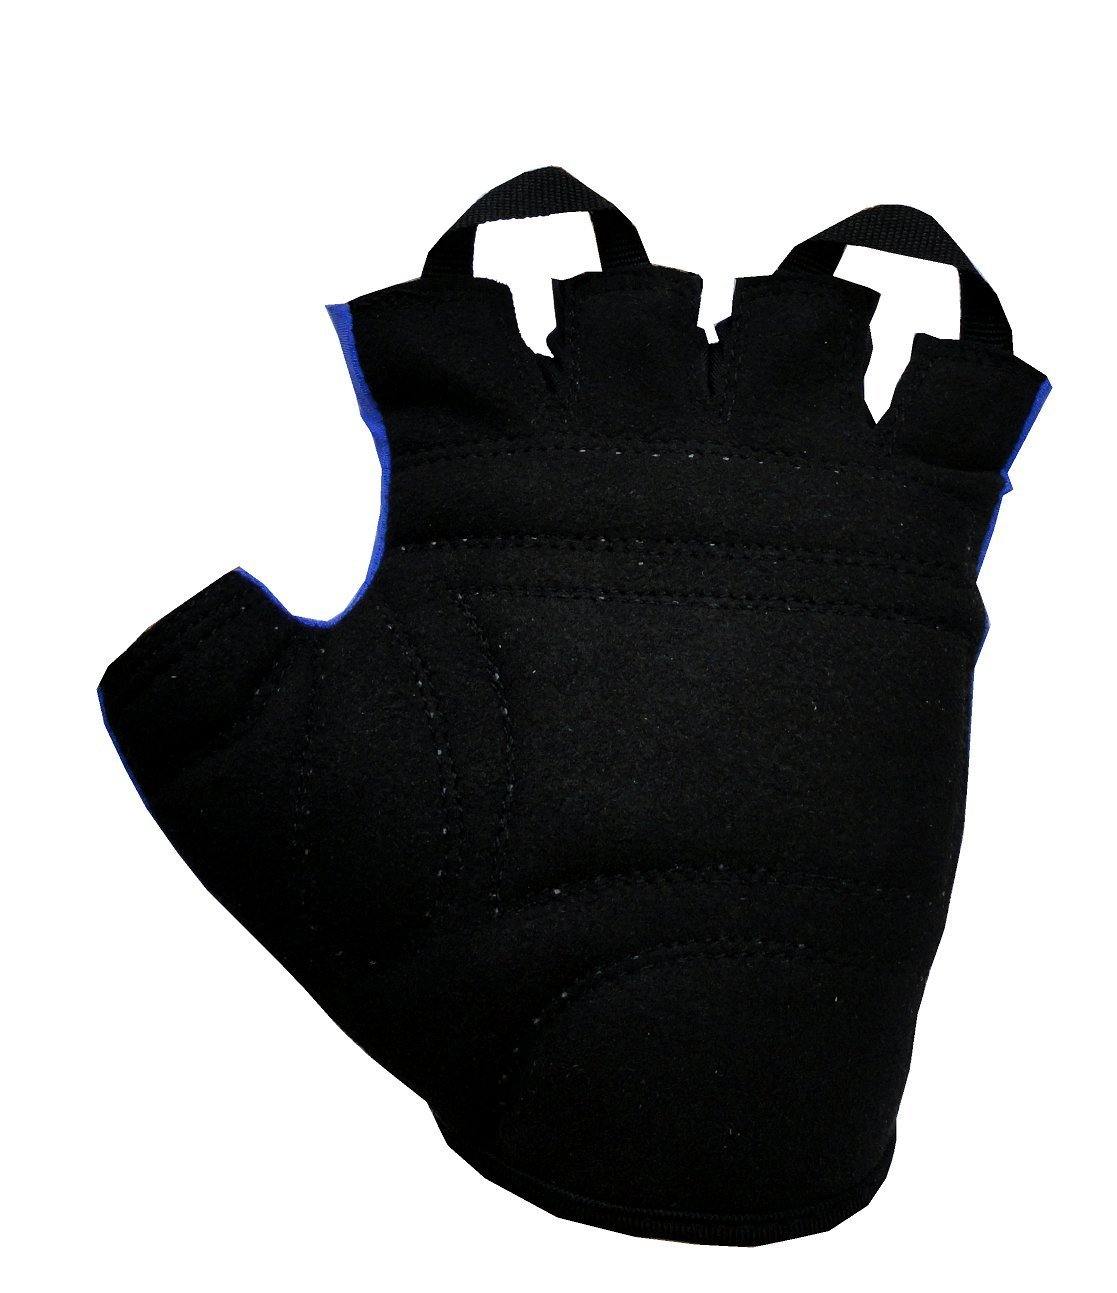 Kobo Leather Fitness Gloves Blue - Best Price online Prokicksports.com